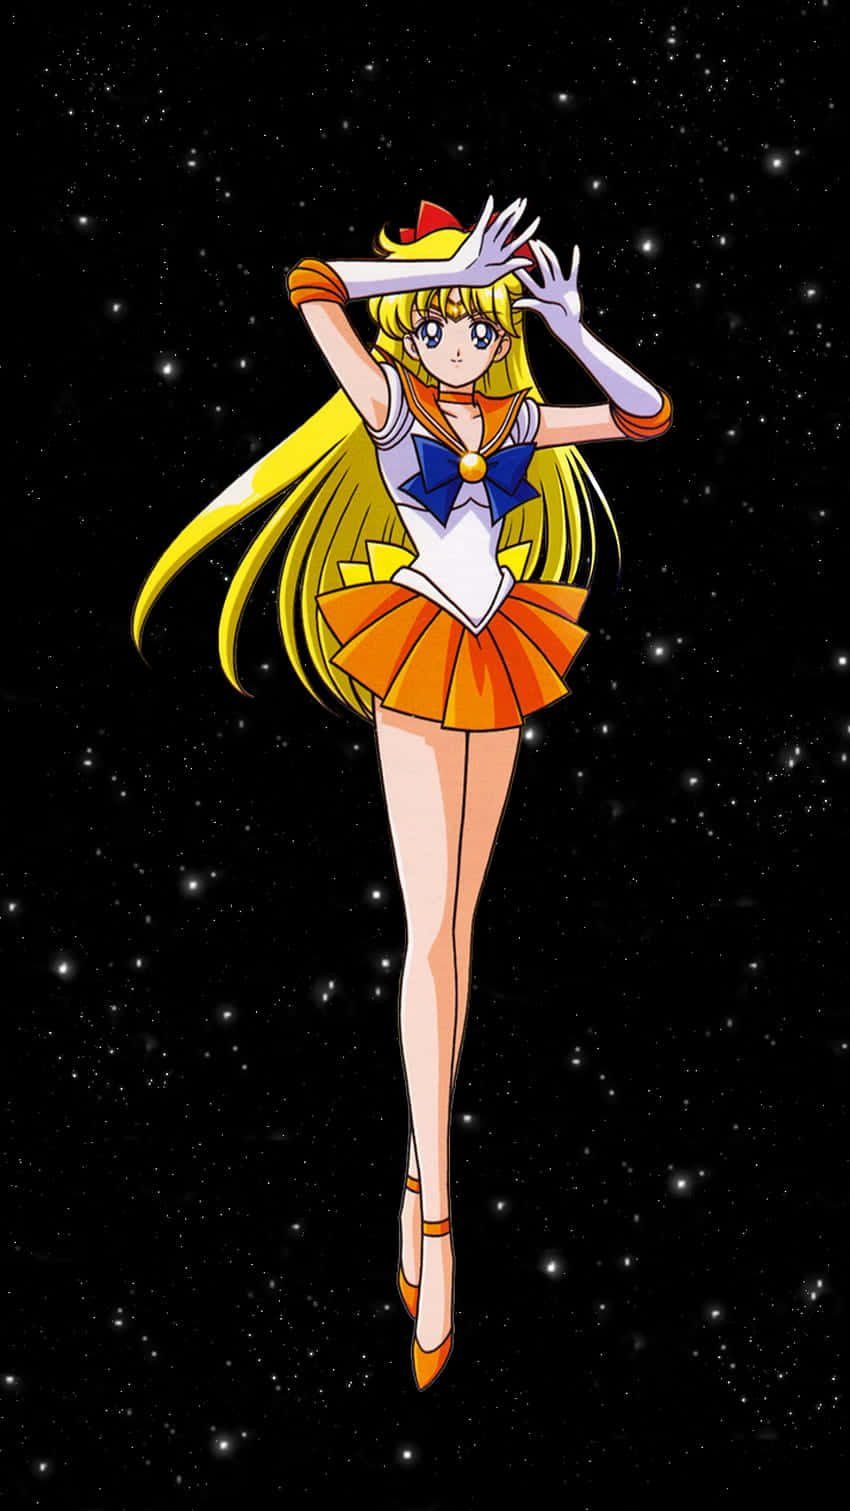 Sailor moon wallpaper for your phone! - Sailor Venus